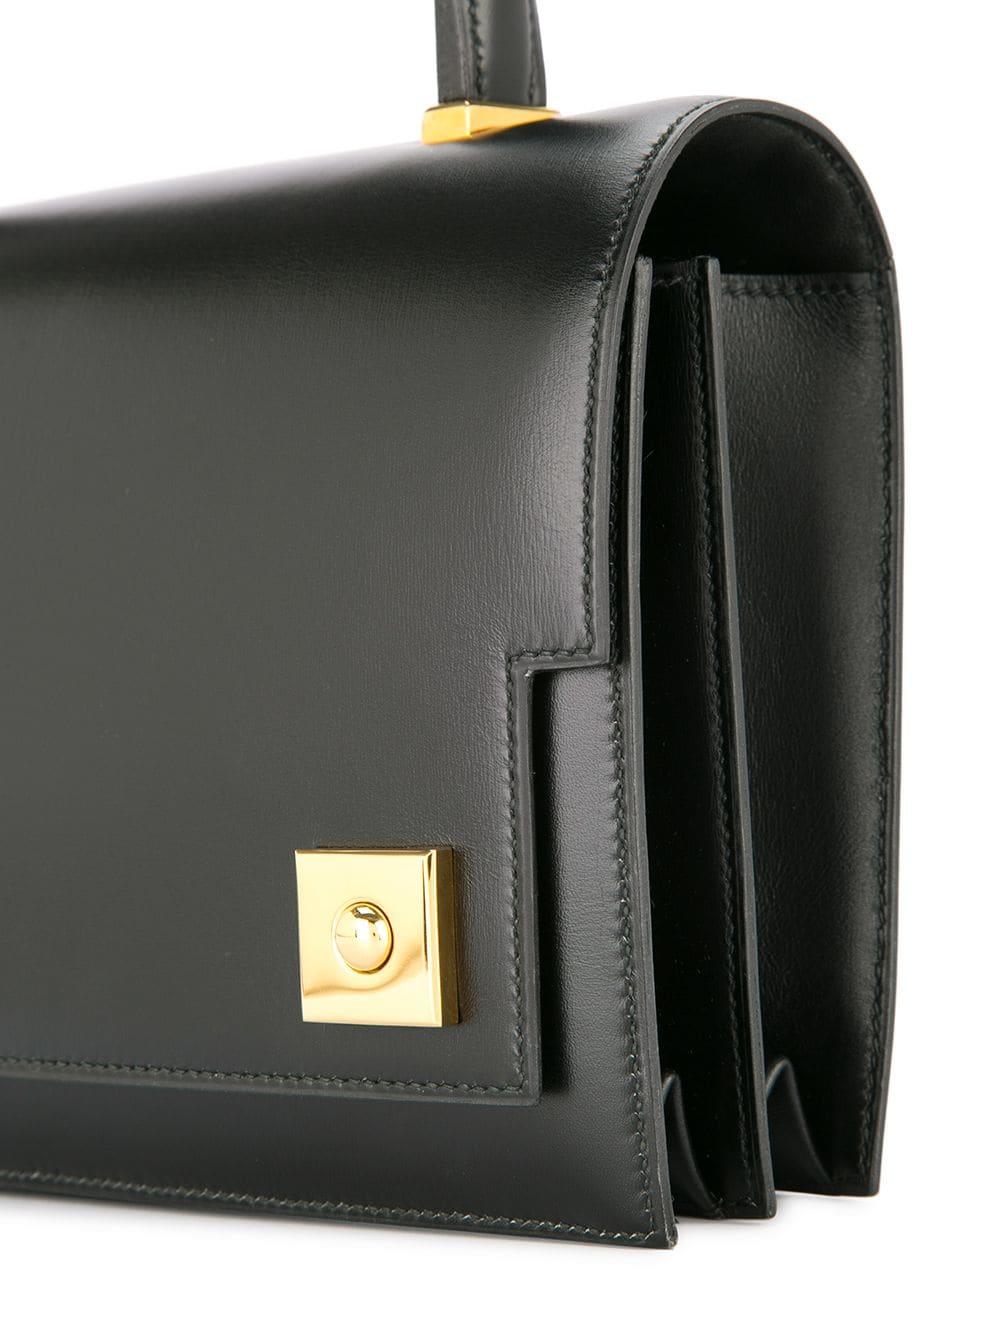 Women's Hermes Black Leather Evening Gold Stud Top Handle Satchel Kelly Style Bag